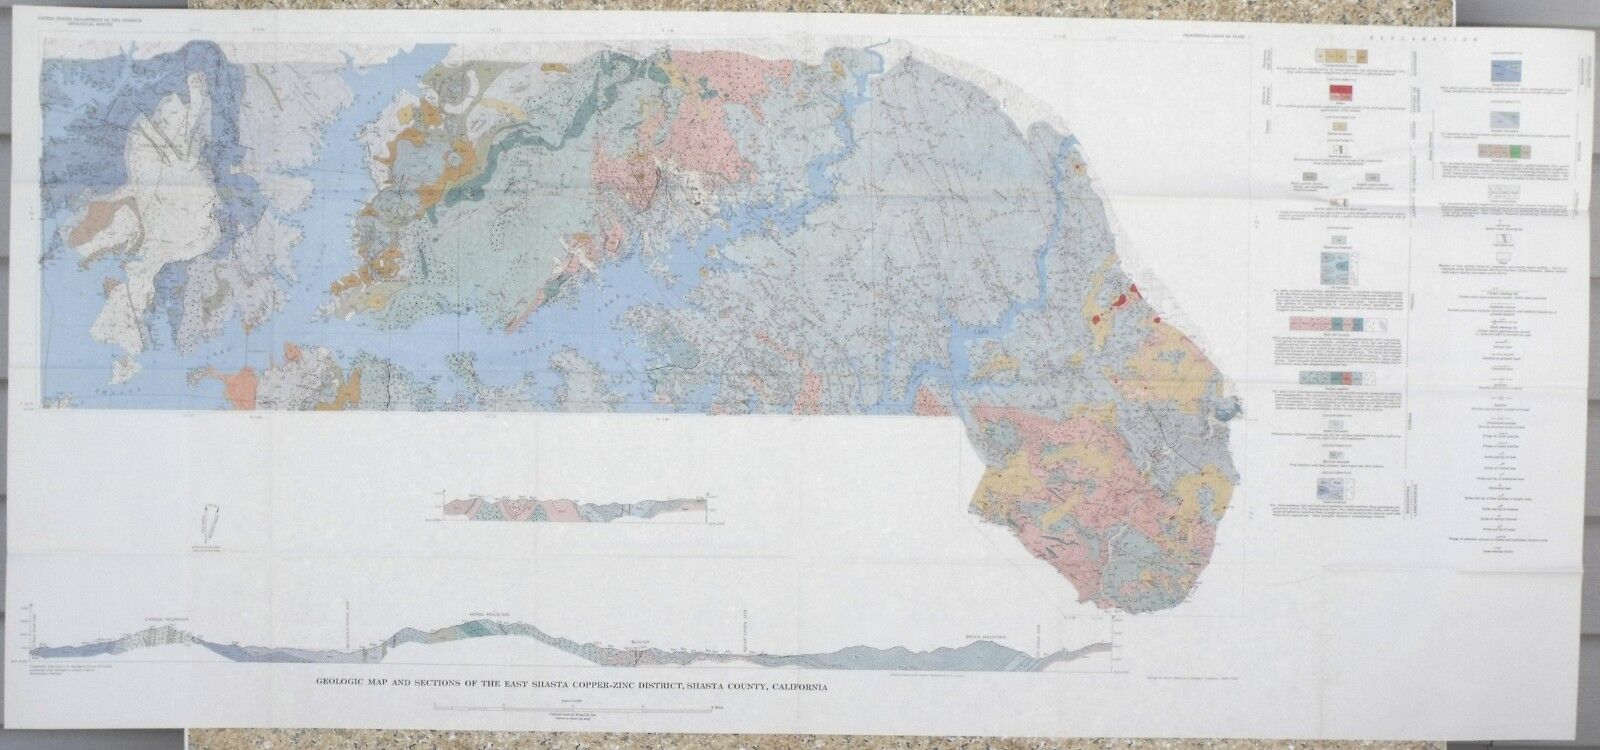 USGS EAST SHASTA COPPER ZINC DISTRICT, CALIFORNIA, HUGE 16 MAPS, 1961, REDDING